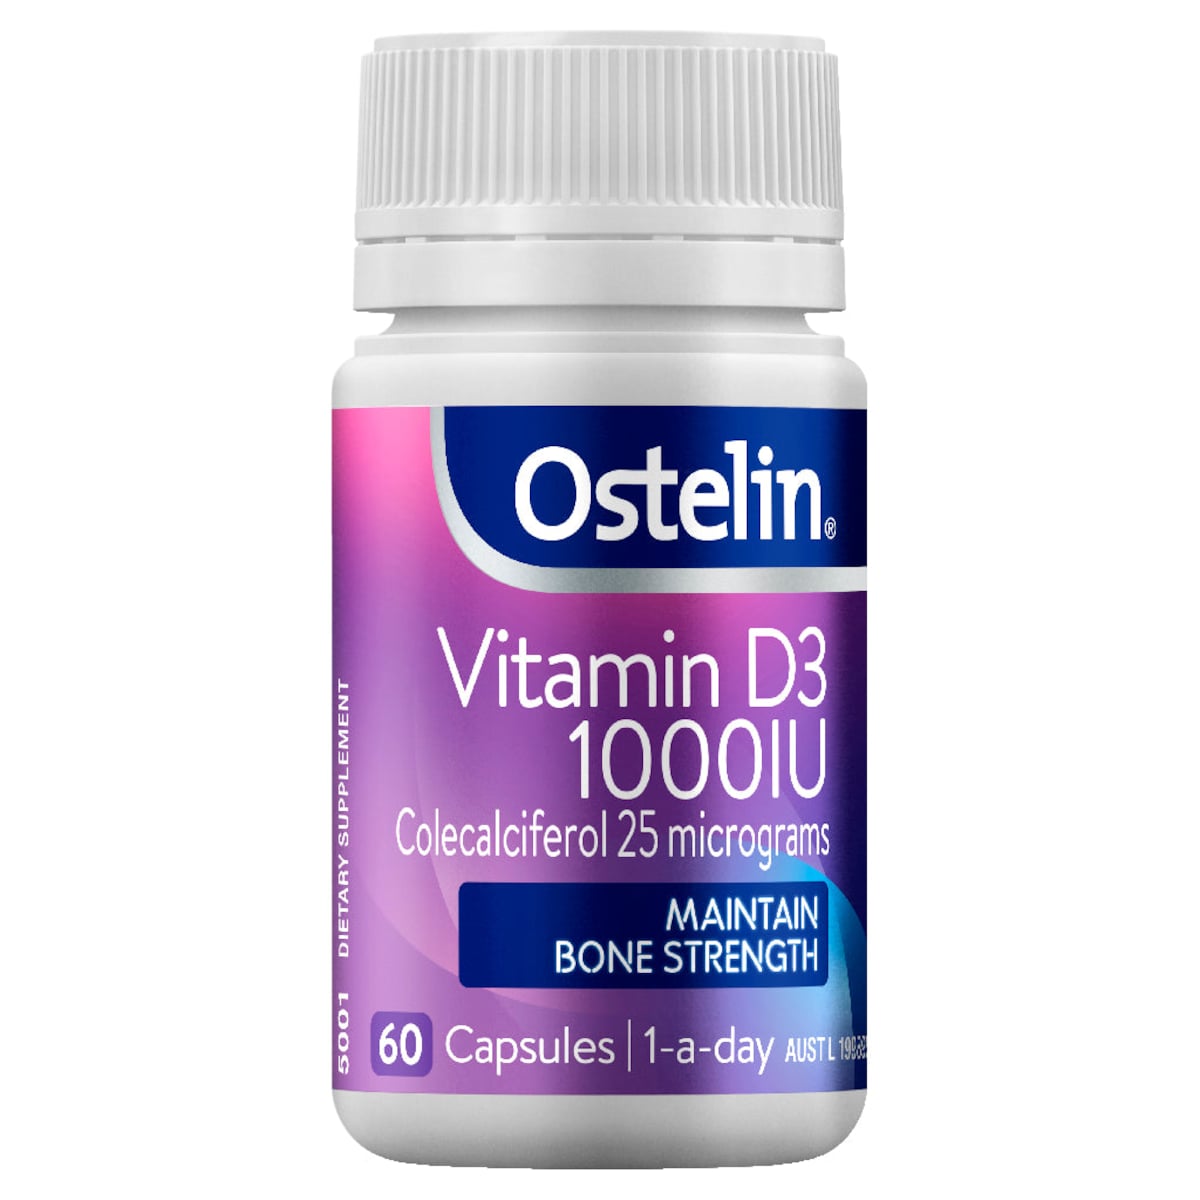 Ostelin Vitamin D 1000iu 60 Capsules